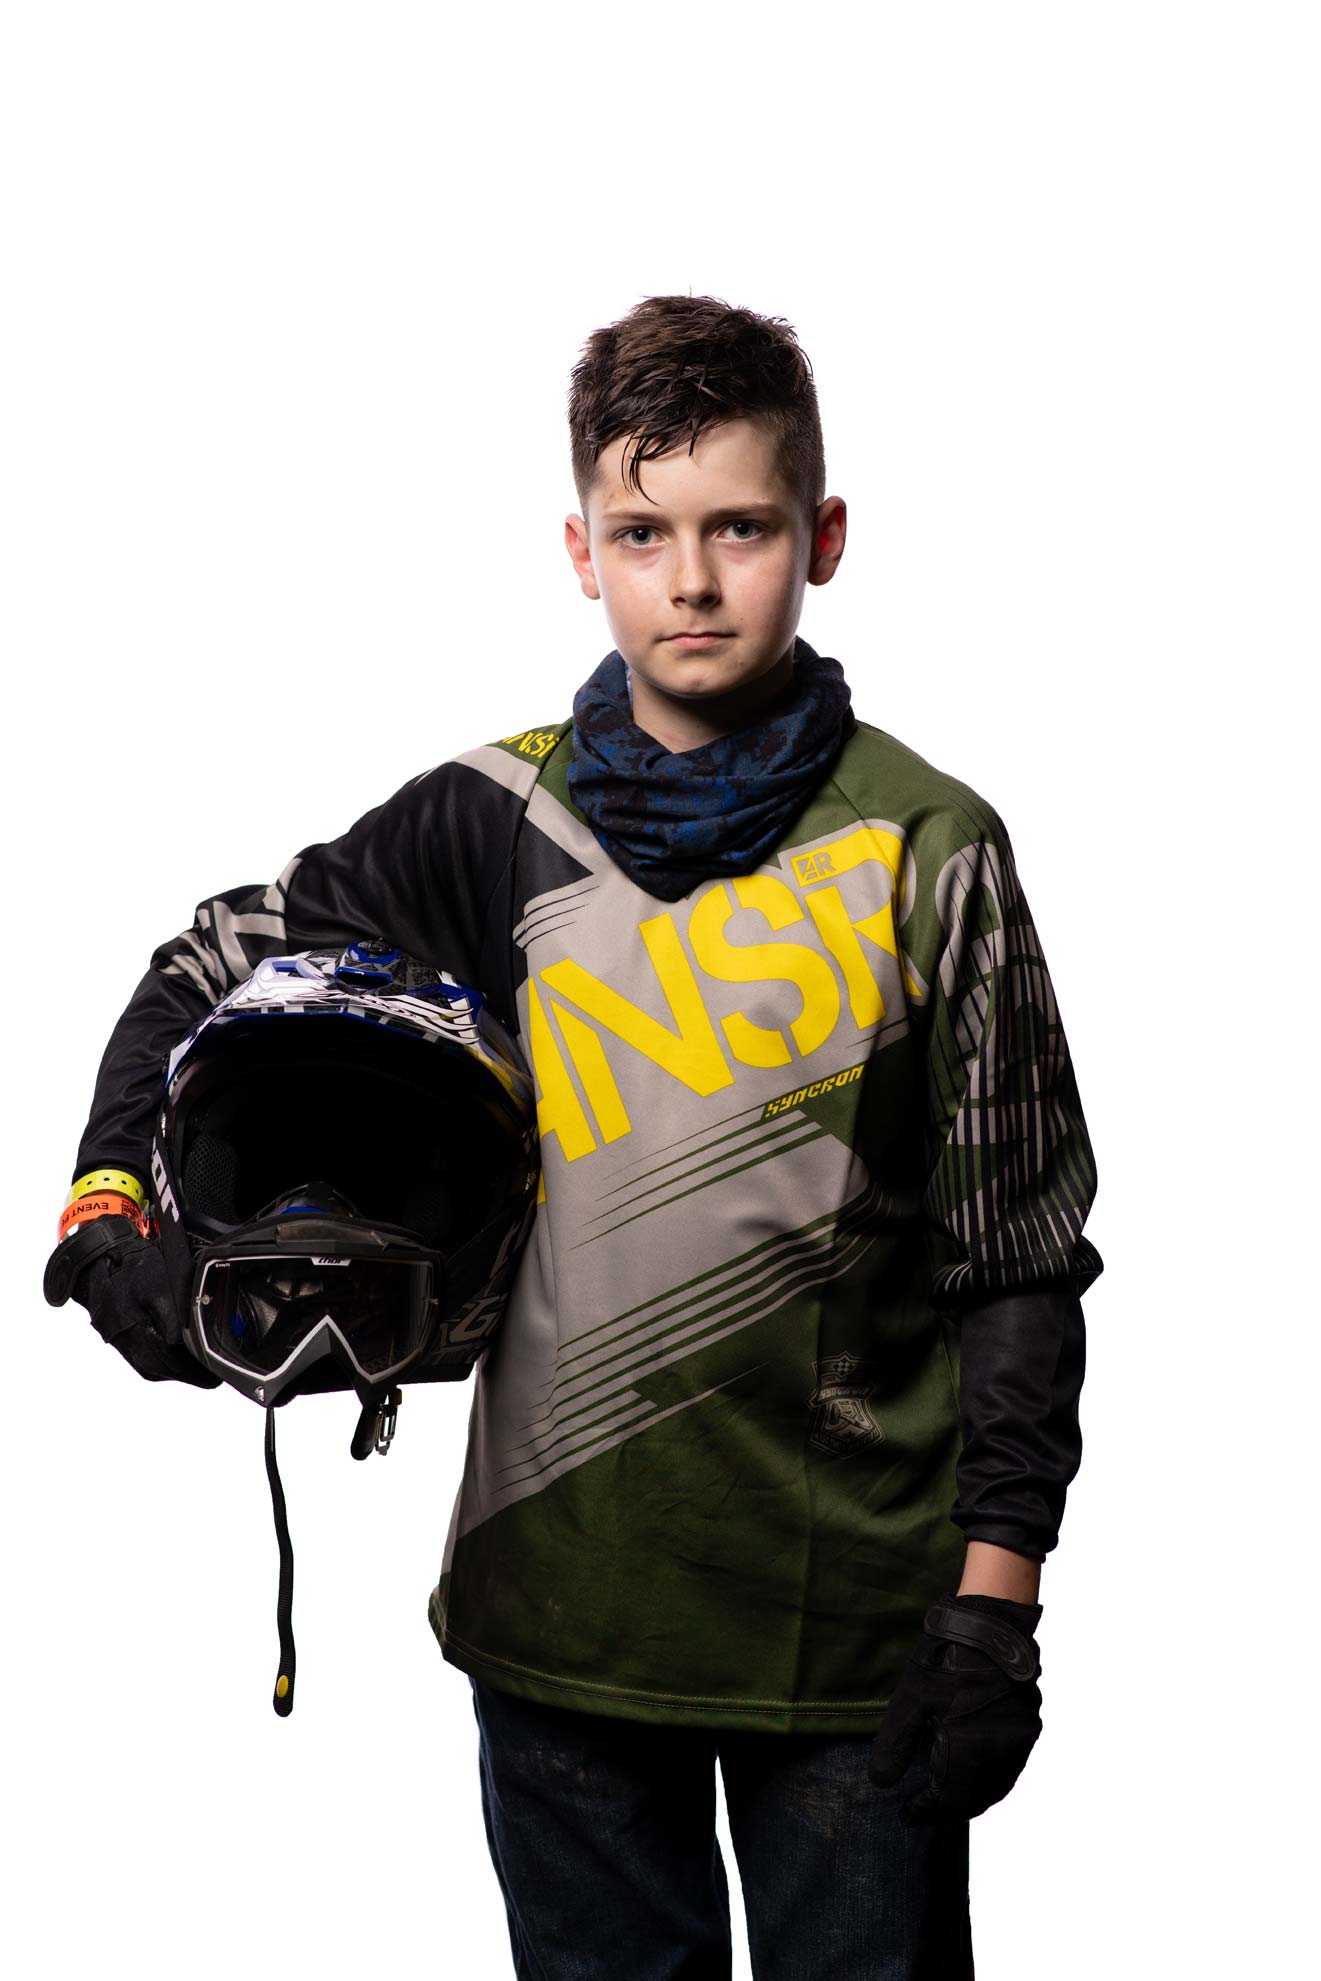 National Trailfest: A portrait of Aidan, ready to race